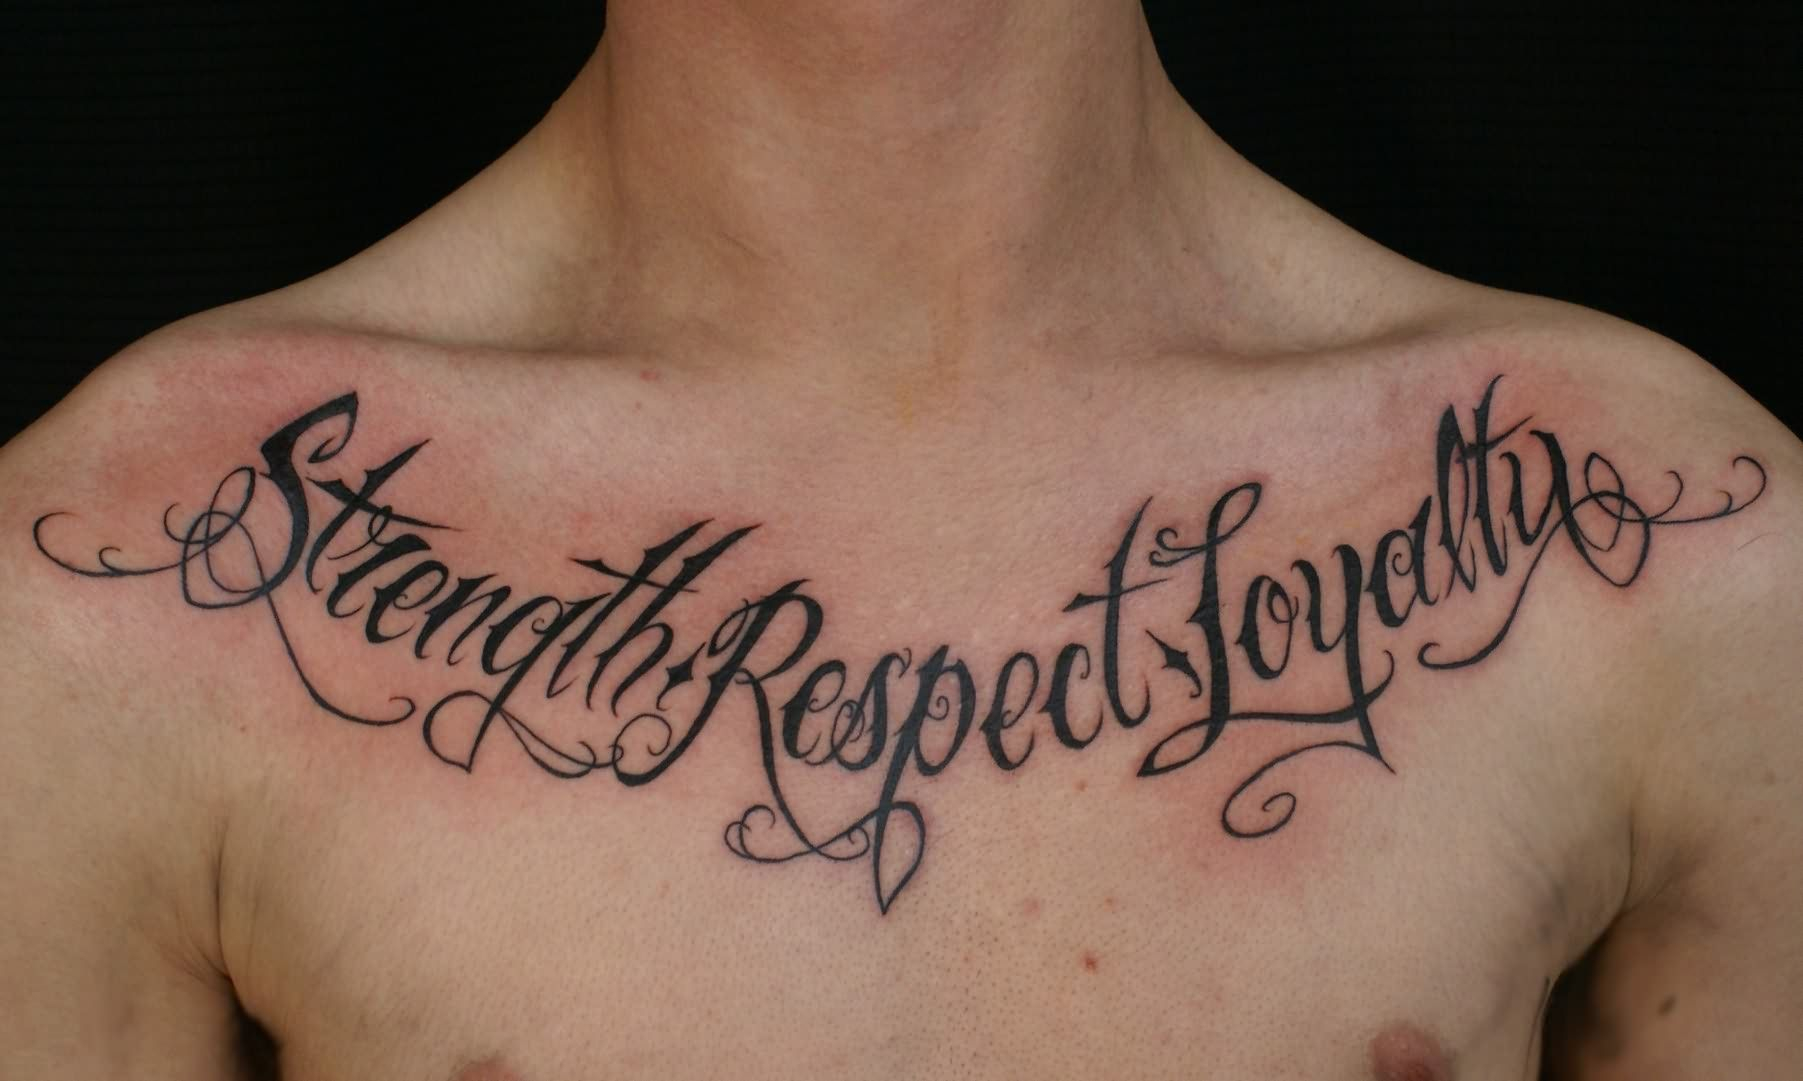 Strength Respect Loyalty Chest Lettering Tattoo Tattoos Tattoos regarding dimensions 1803 X 1081